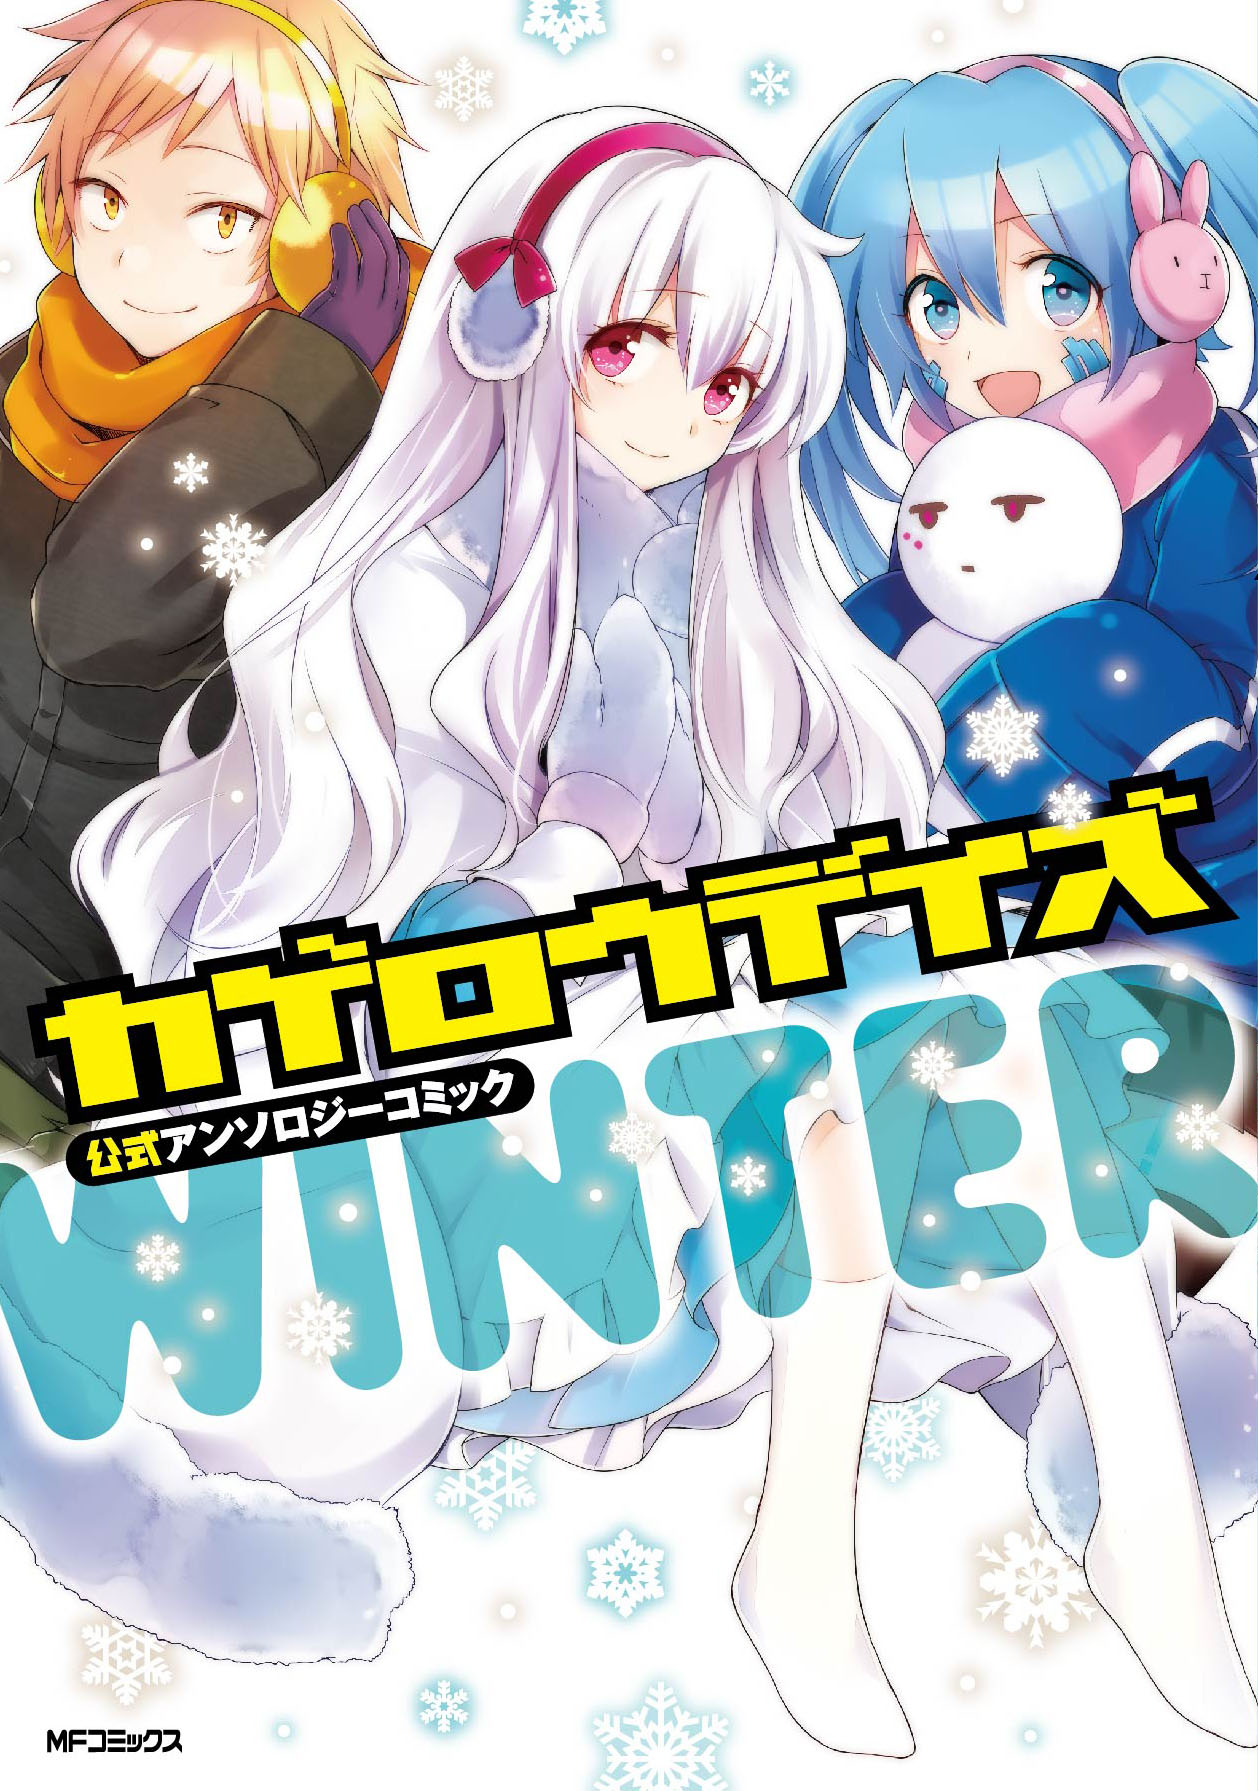 Читать мангу зимняя. Project Winter обложка. Thousand Winters Manga.